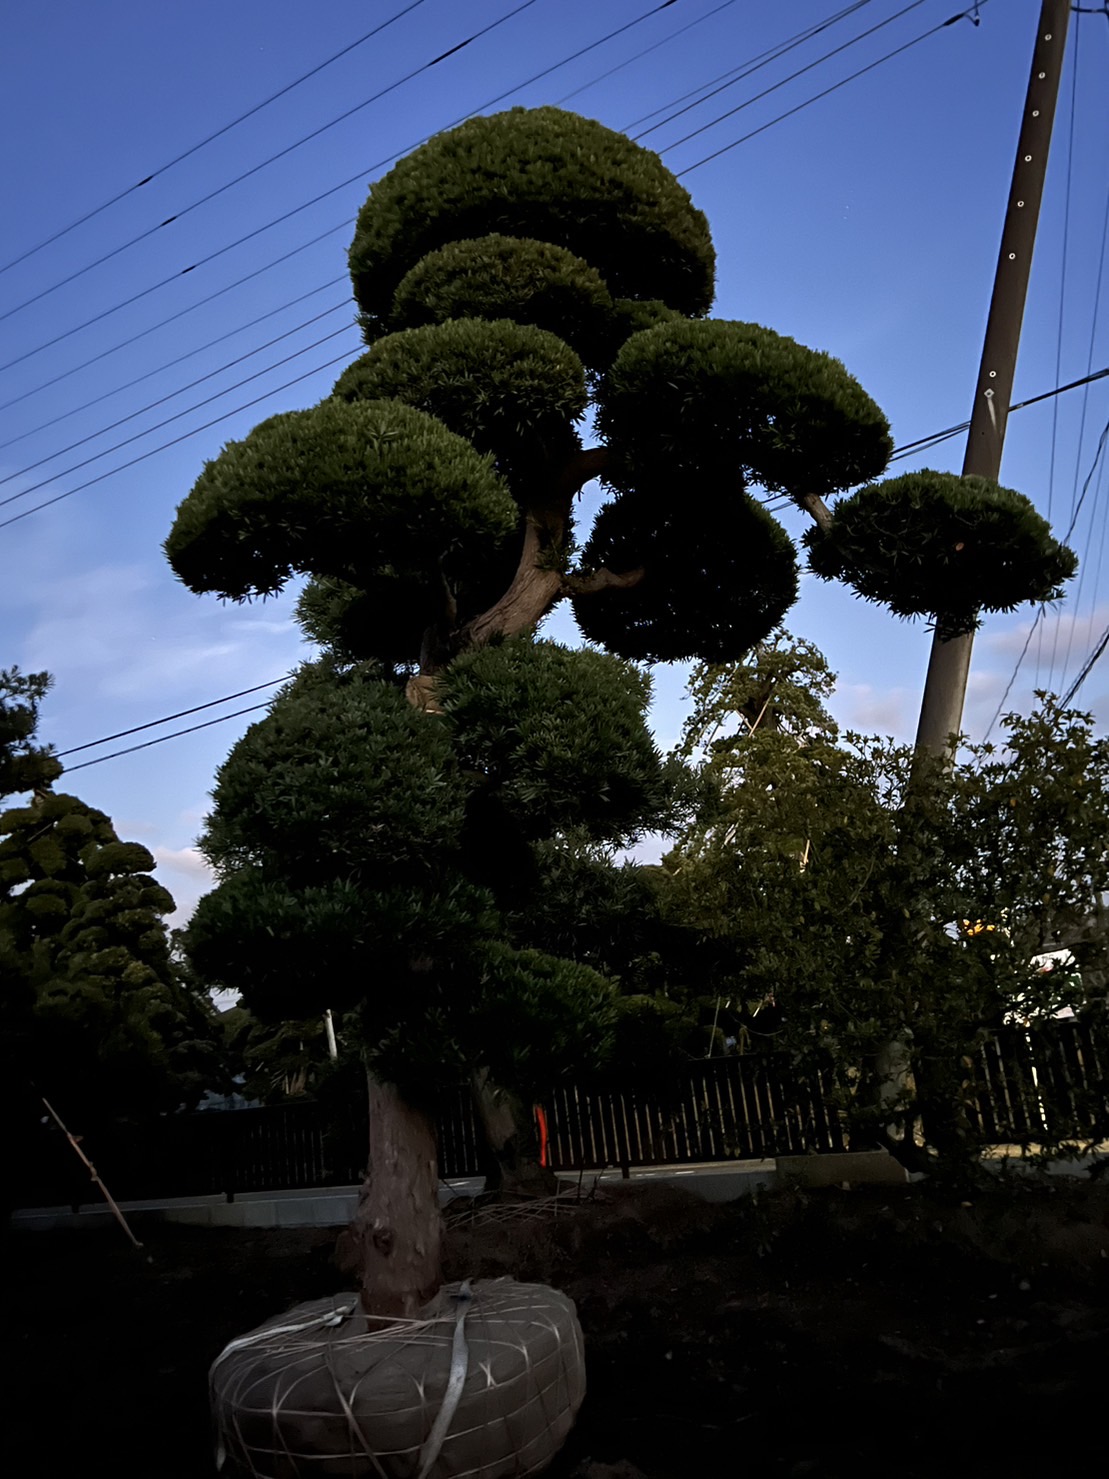 Podocarpus